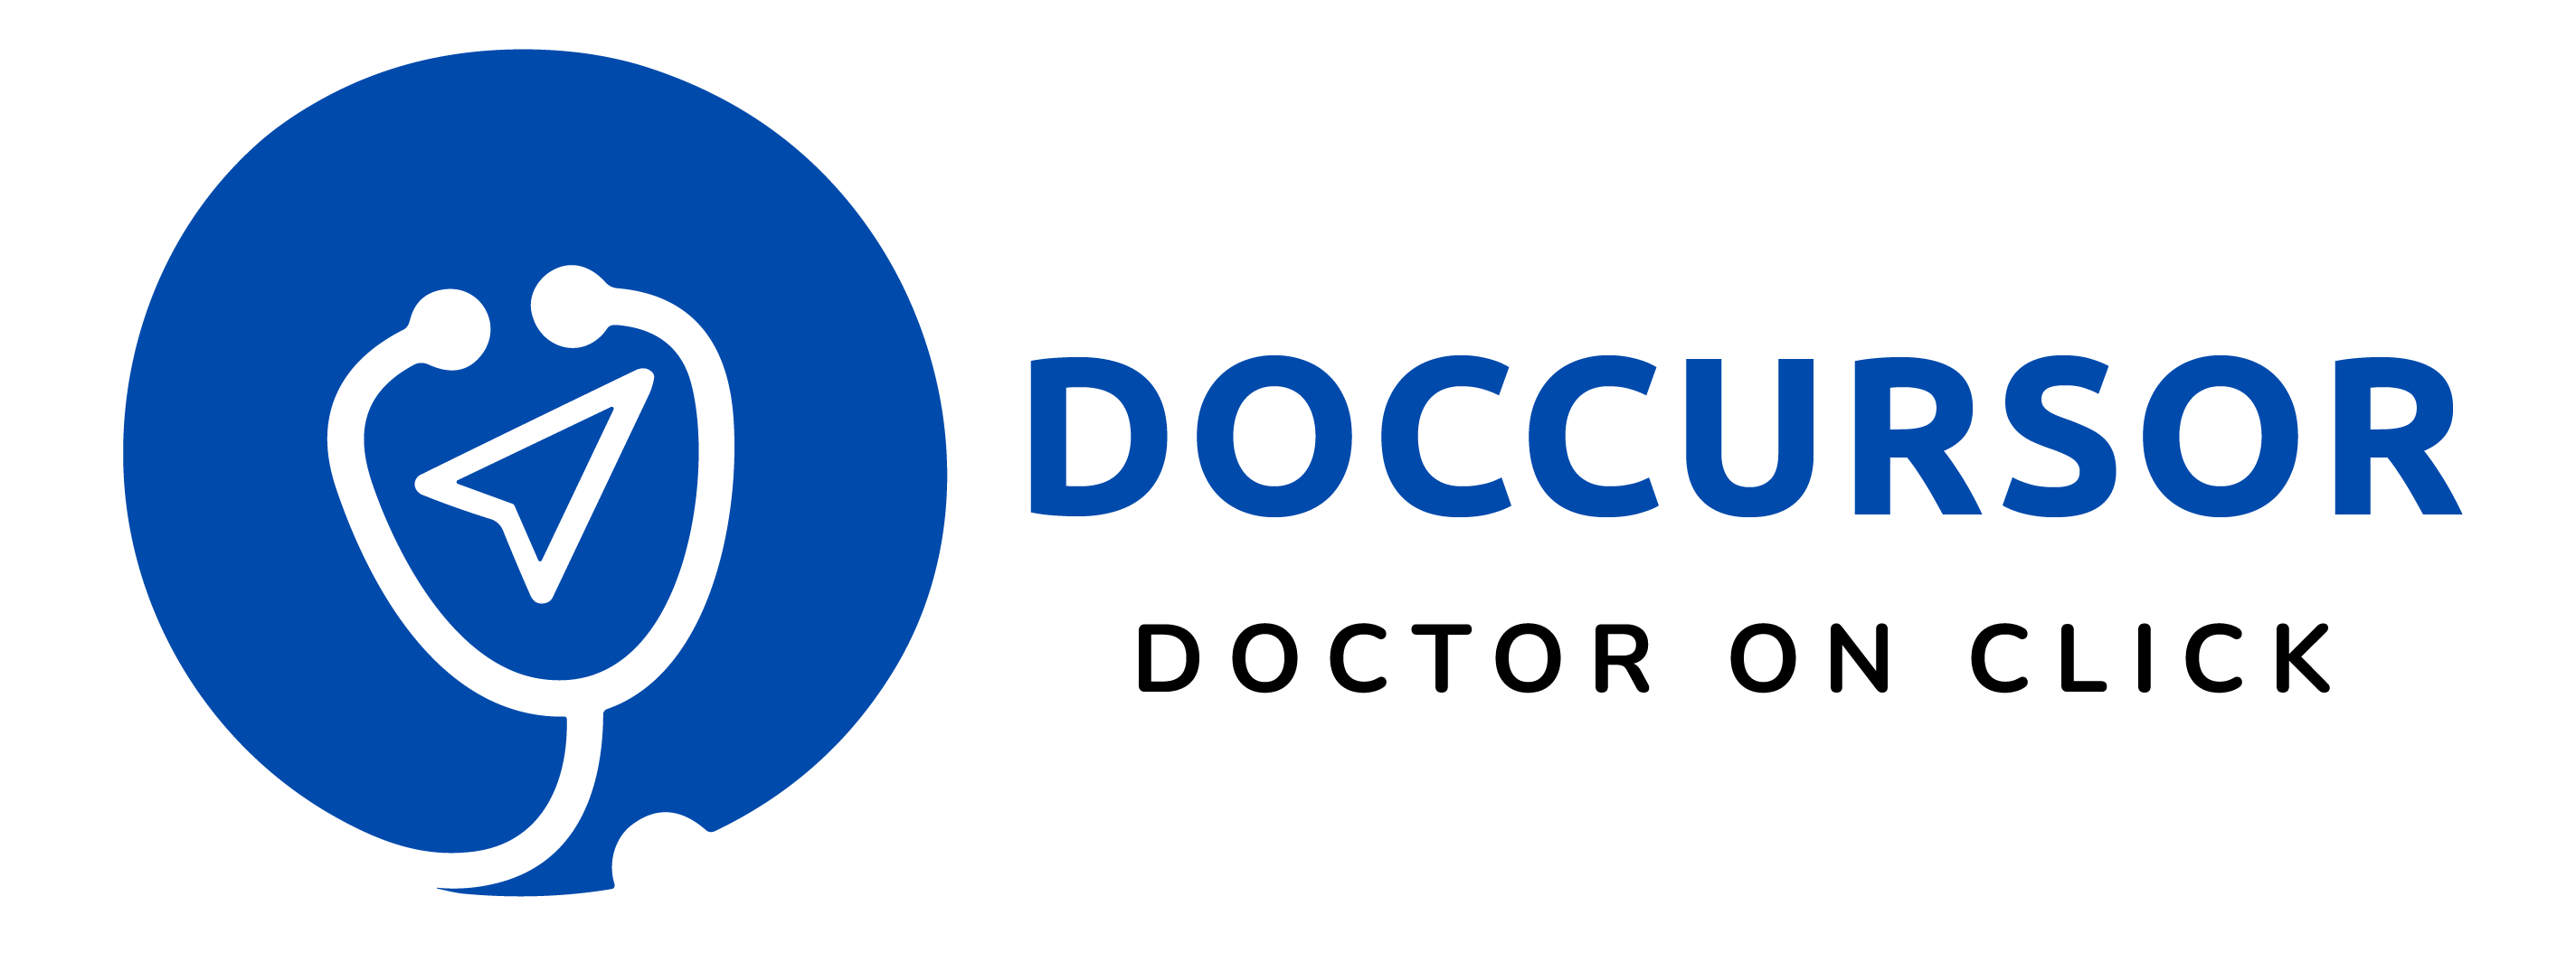 doctor doccursor